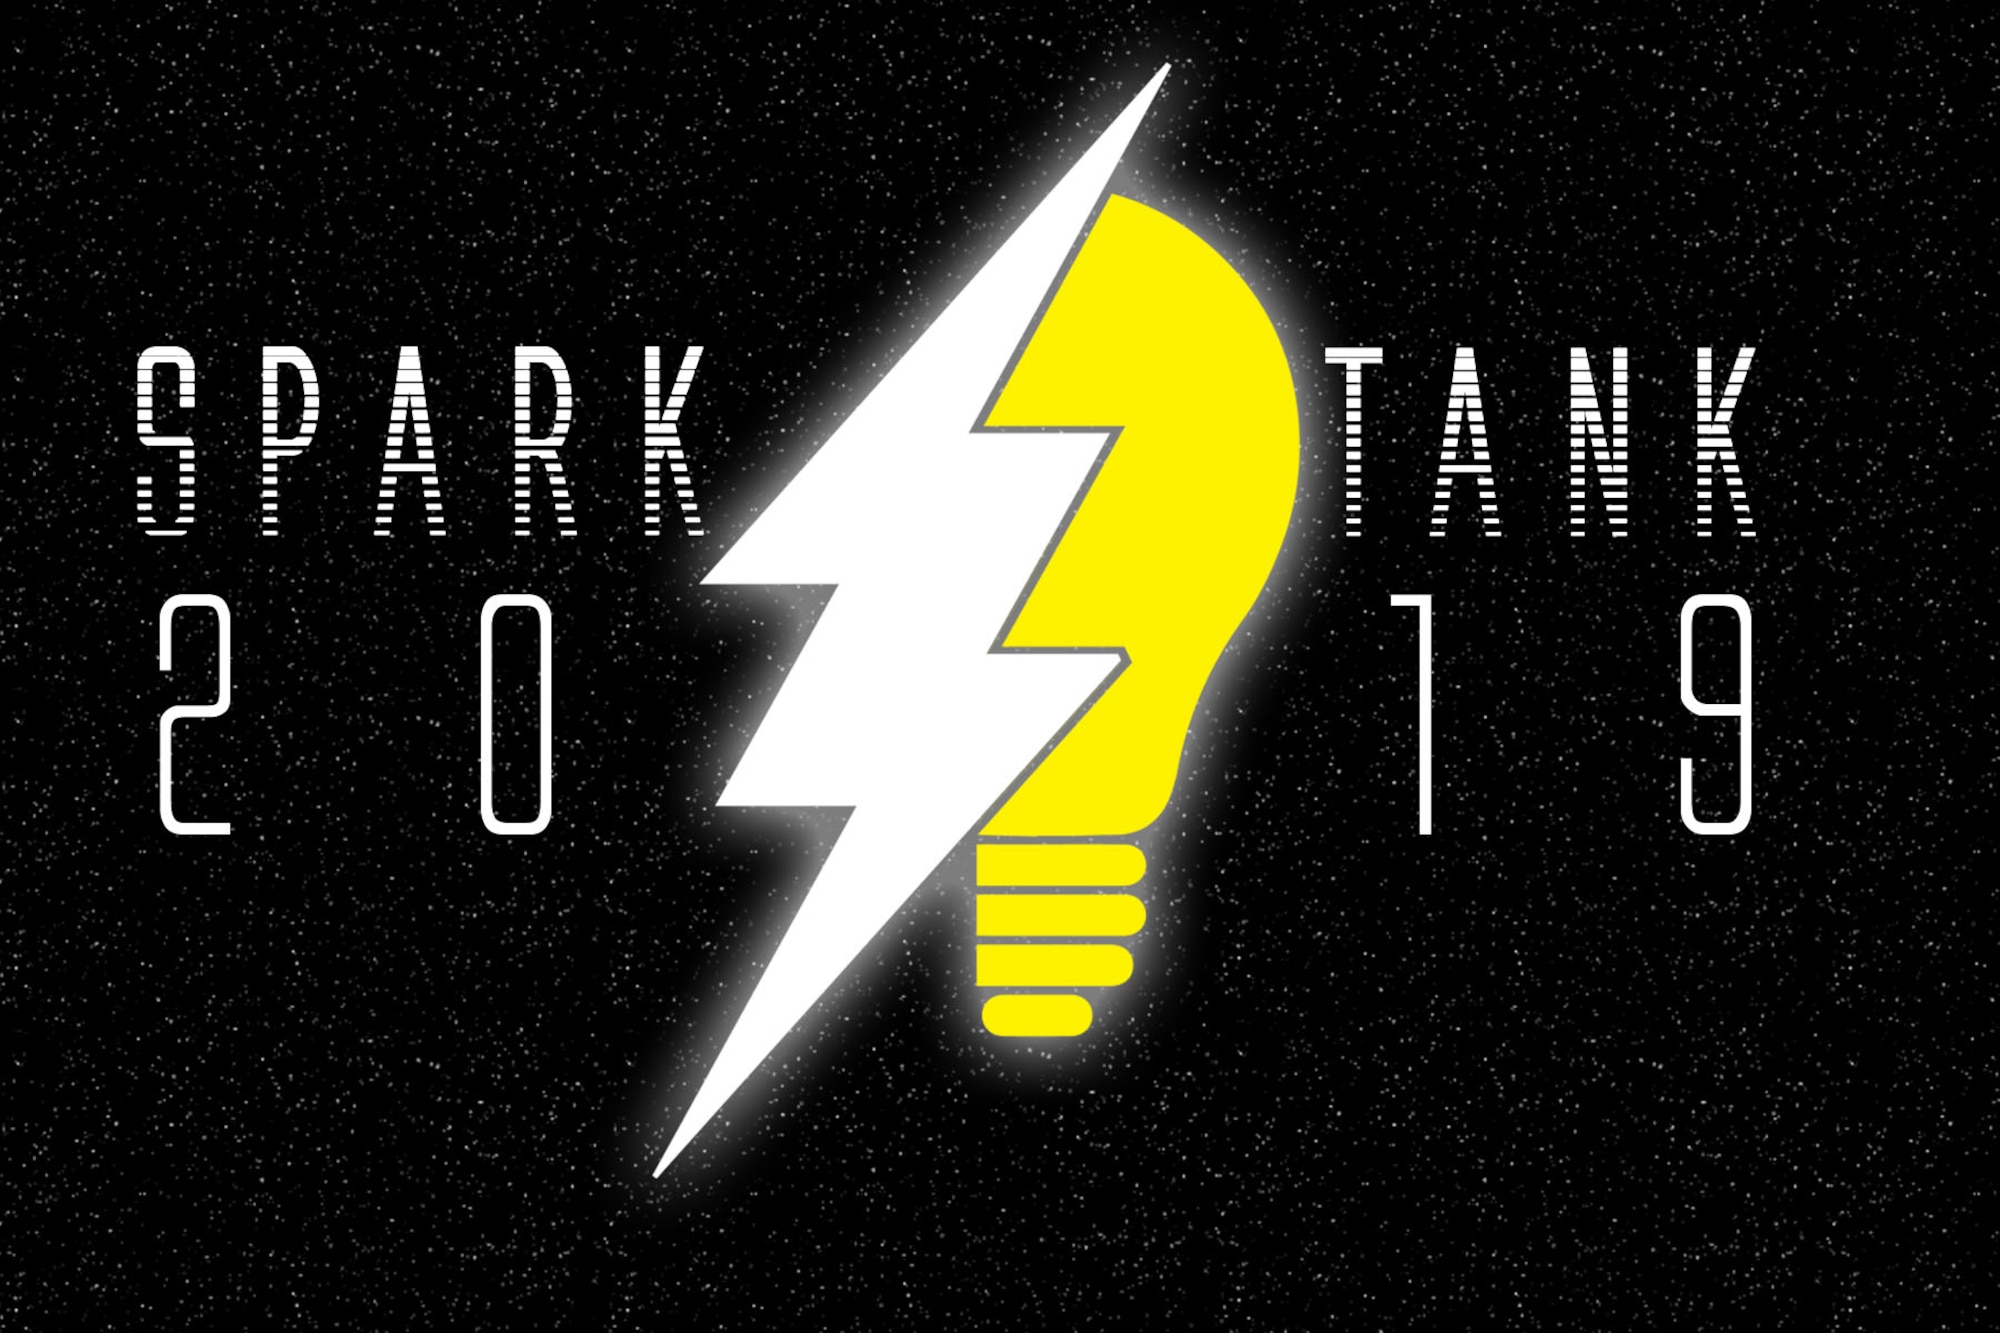 Spark Tank 2019